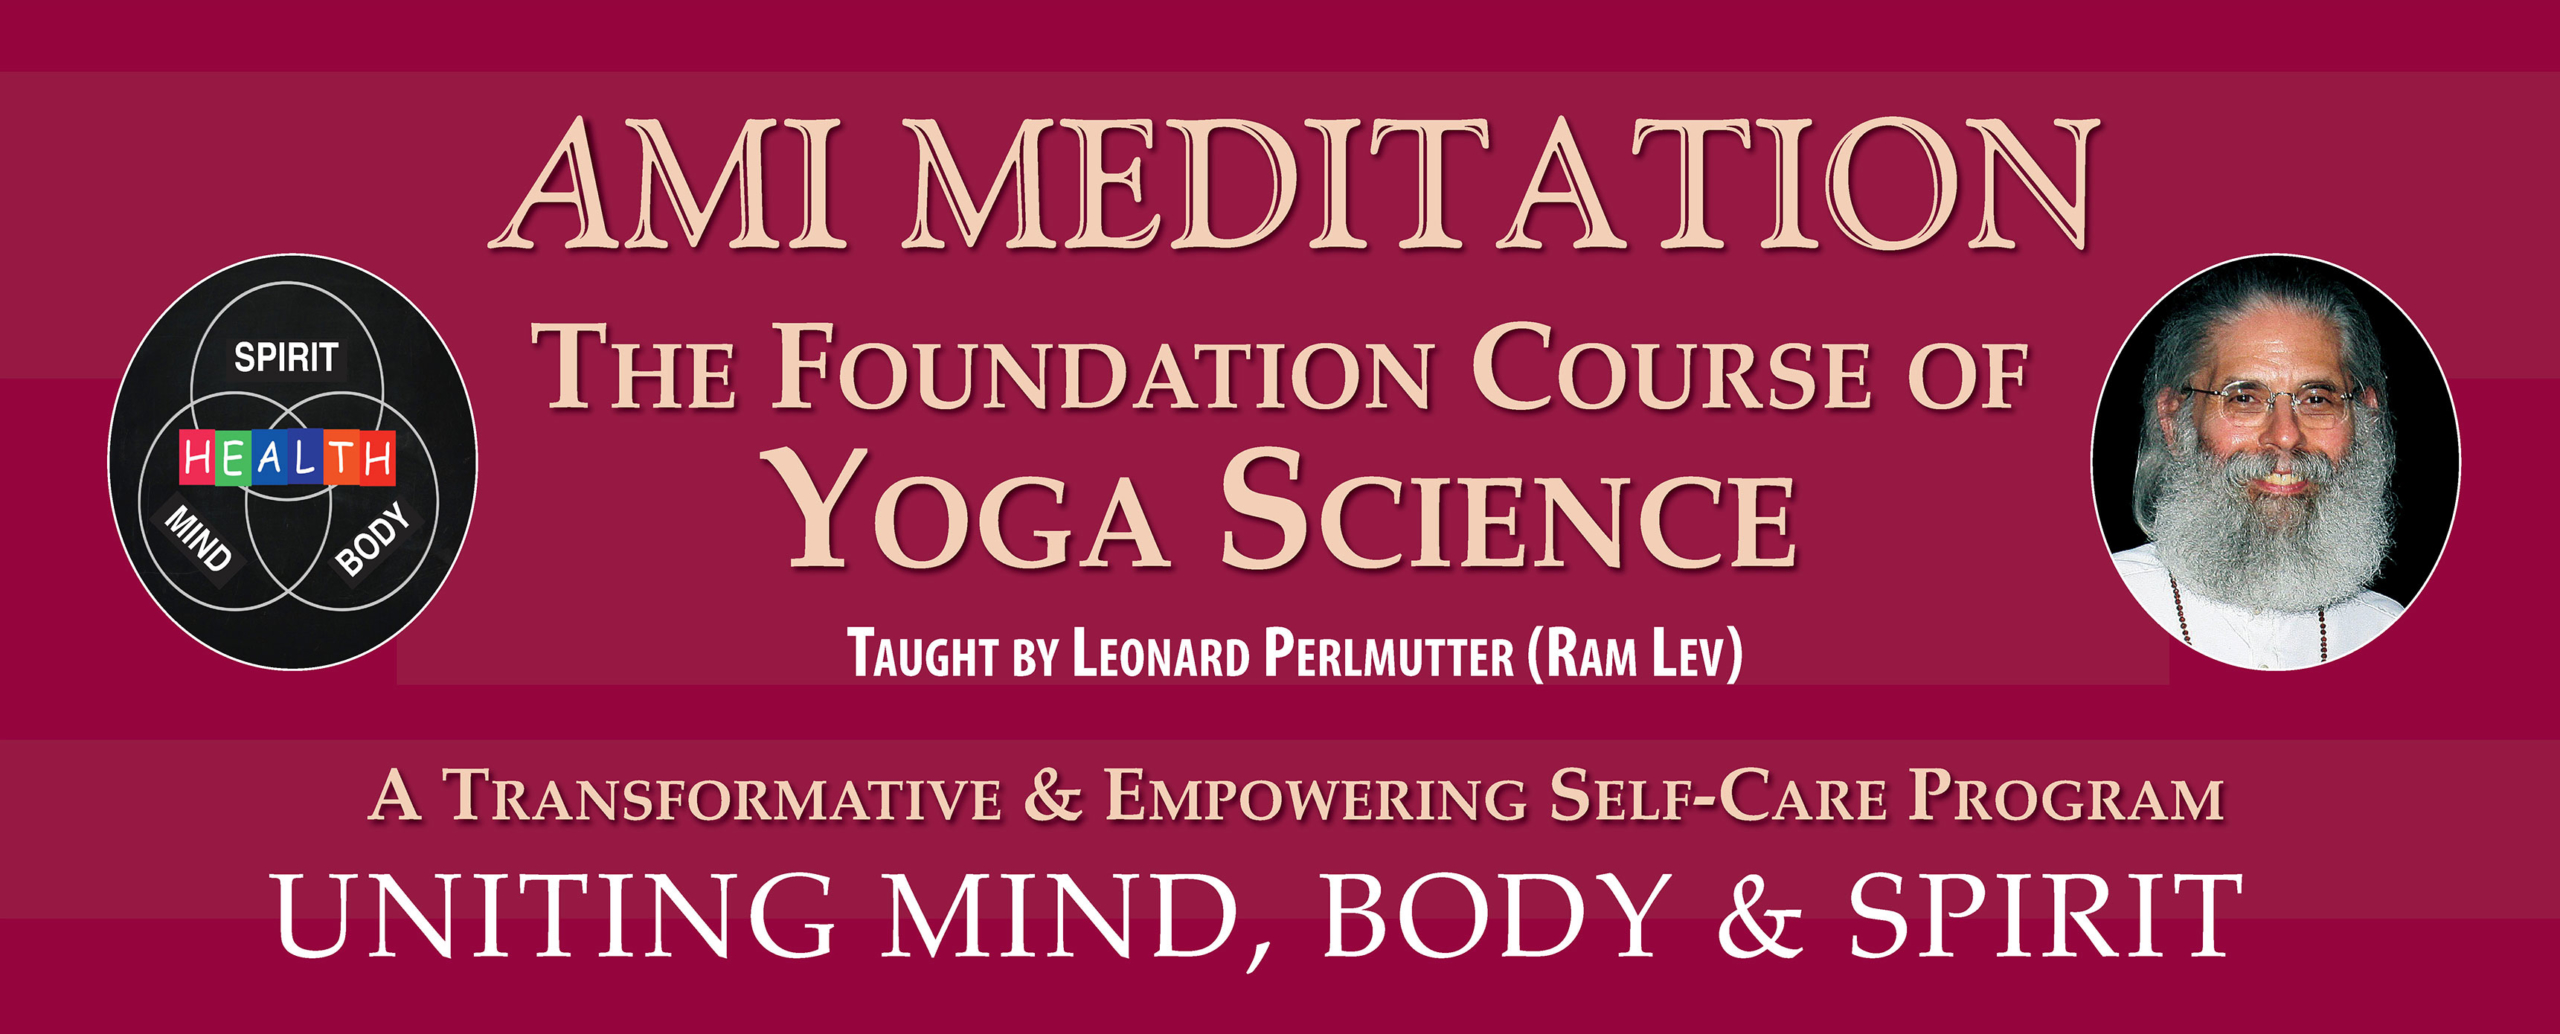 AMI Meditation Mind Body Spirit Foundation Course